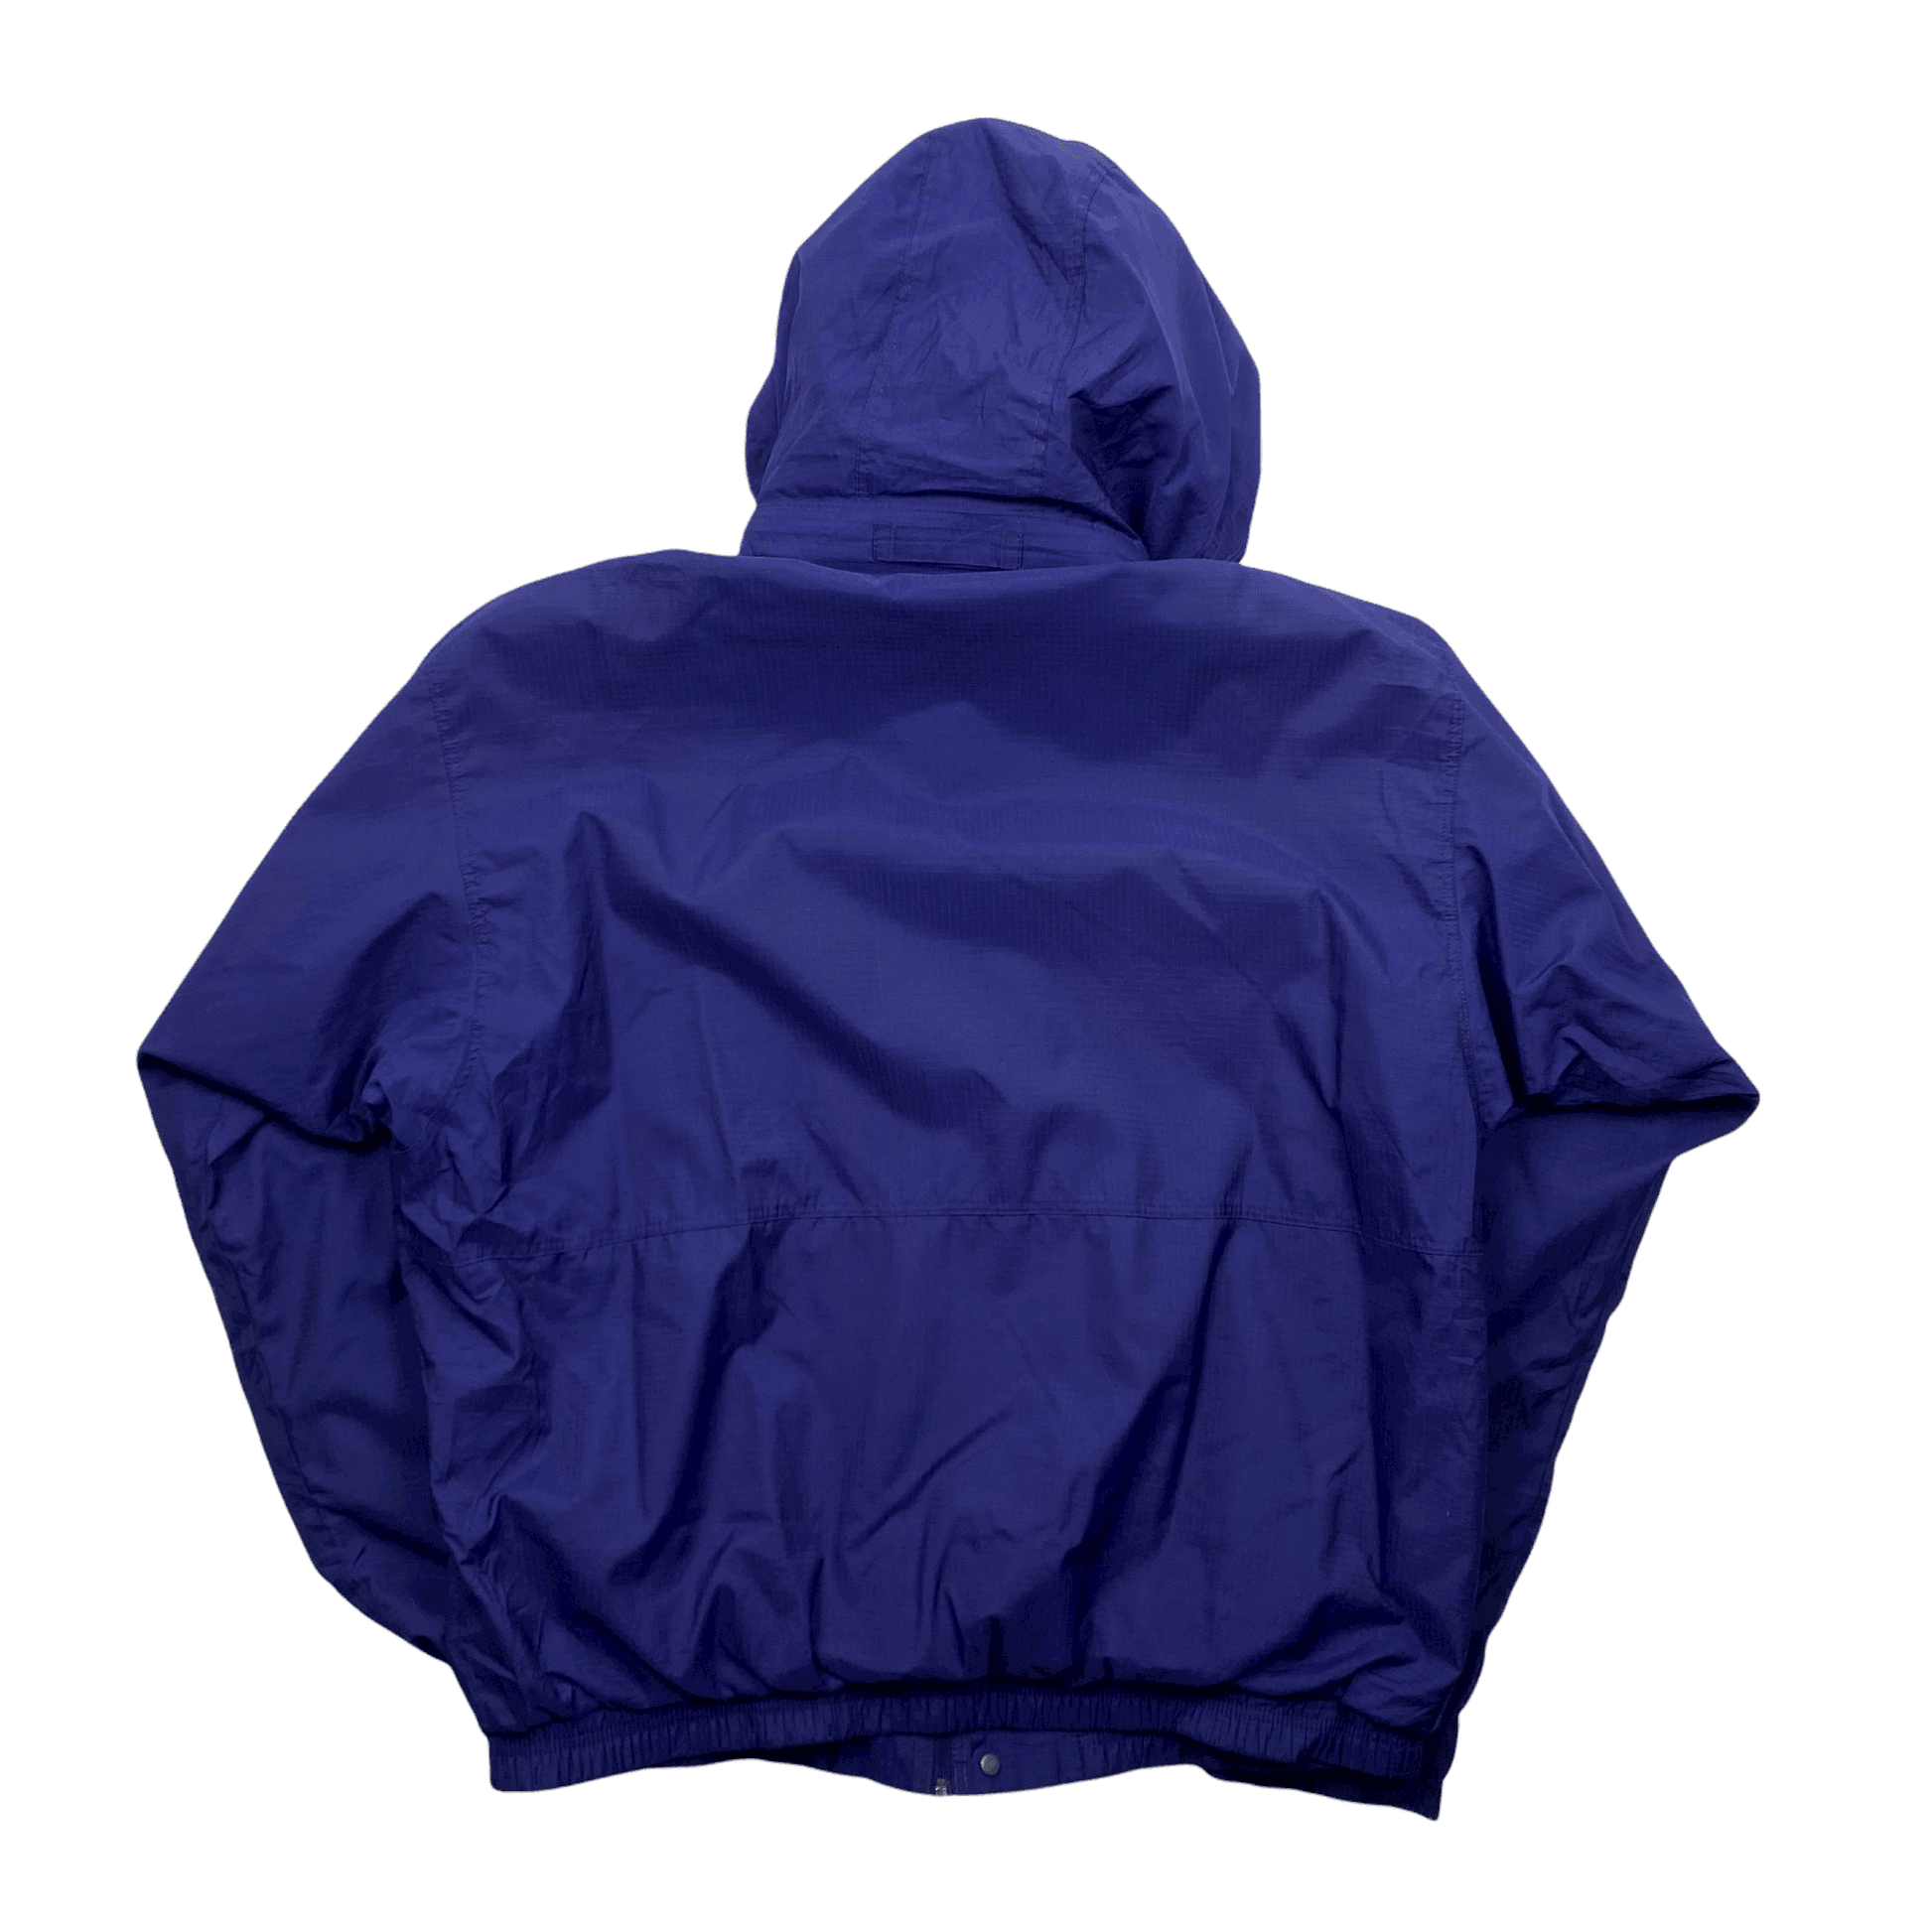 Vintage 90s Women's Purple Patagonia Fleece Lined Jacket - Large - The Streetwear Studio